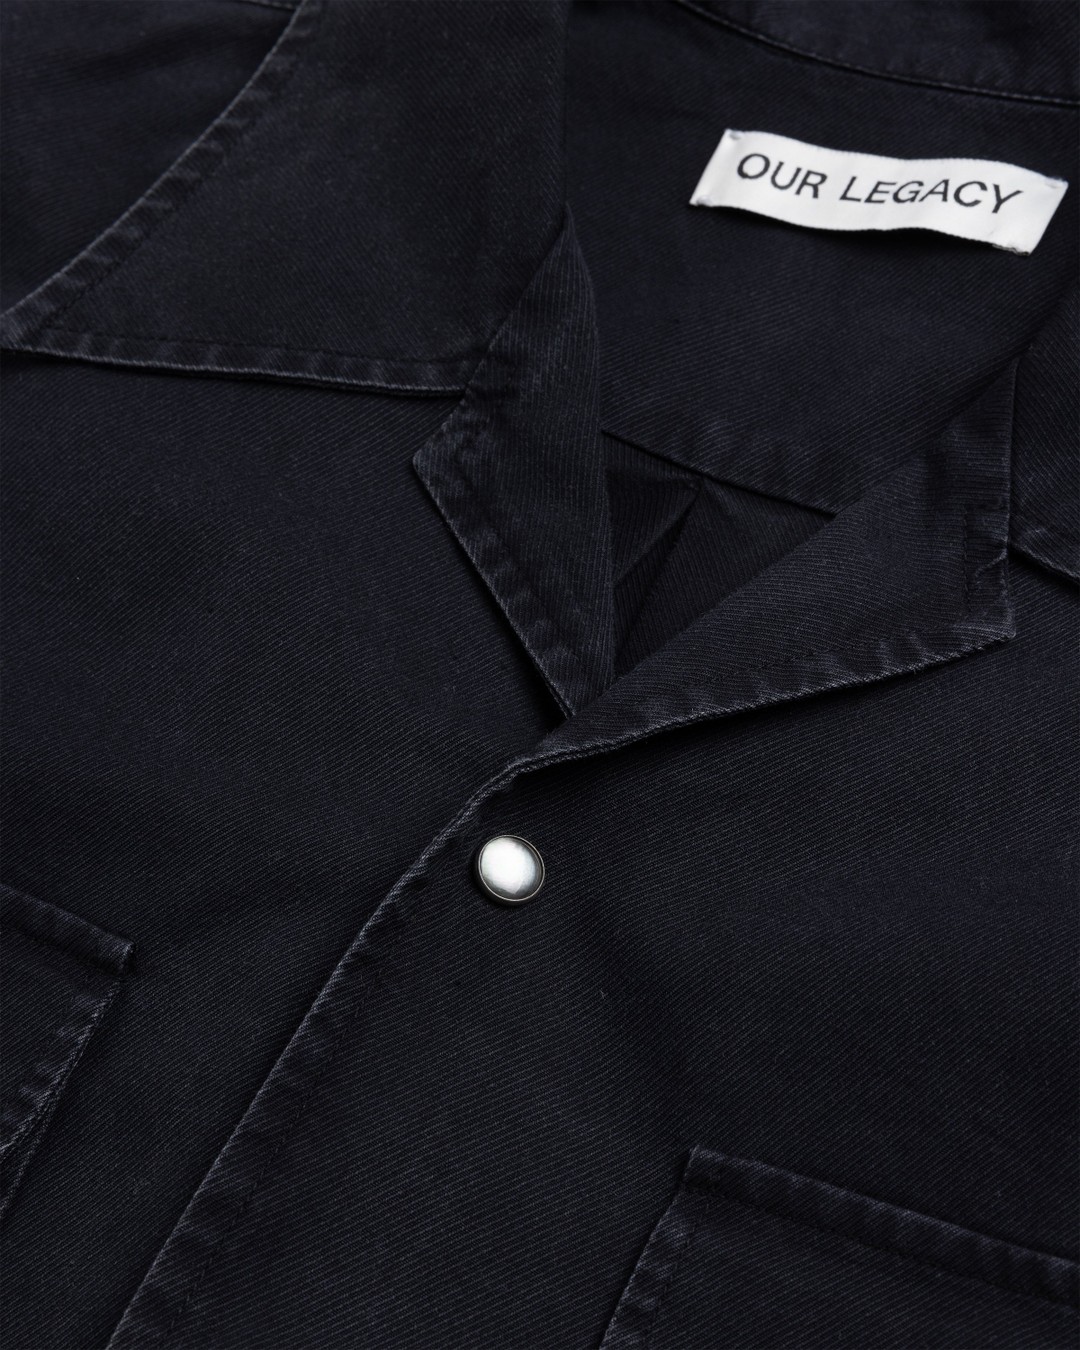 Our Legacy – Poco Shirt Black Cosmic Twill - Shirts - Black - Image 5